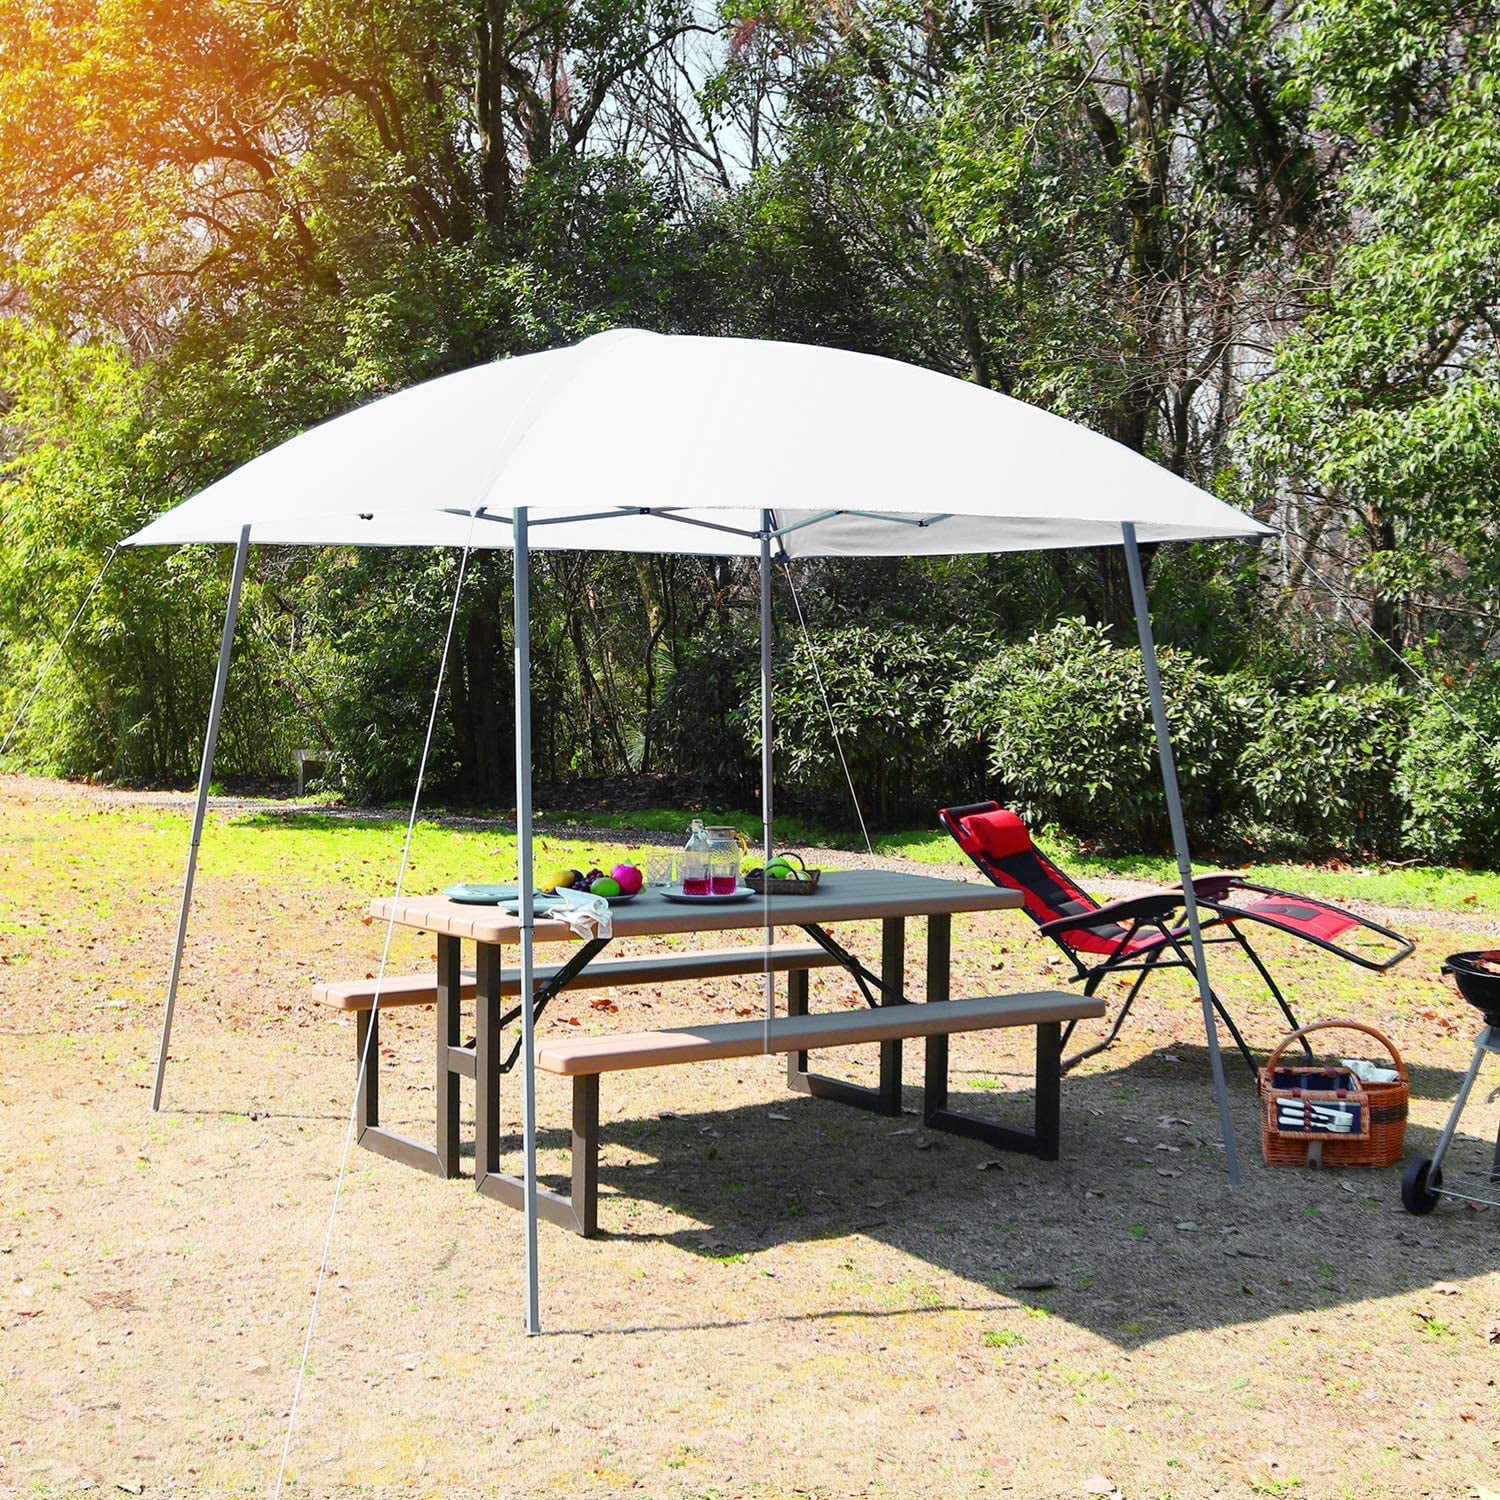 PHI Villa 8x8 Slant Leg UV Block Sun Shade Canopy with Hardware Kits White Shade for Patio Outdoor Garden Events